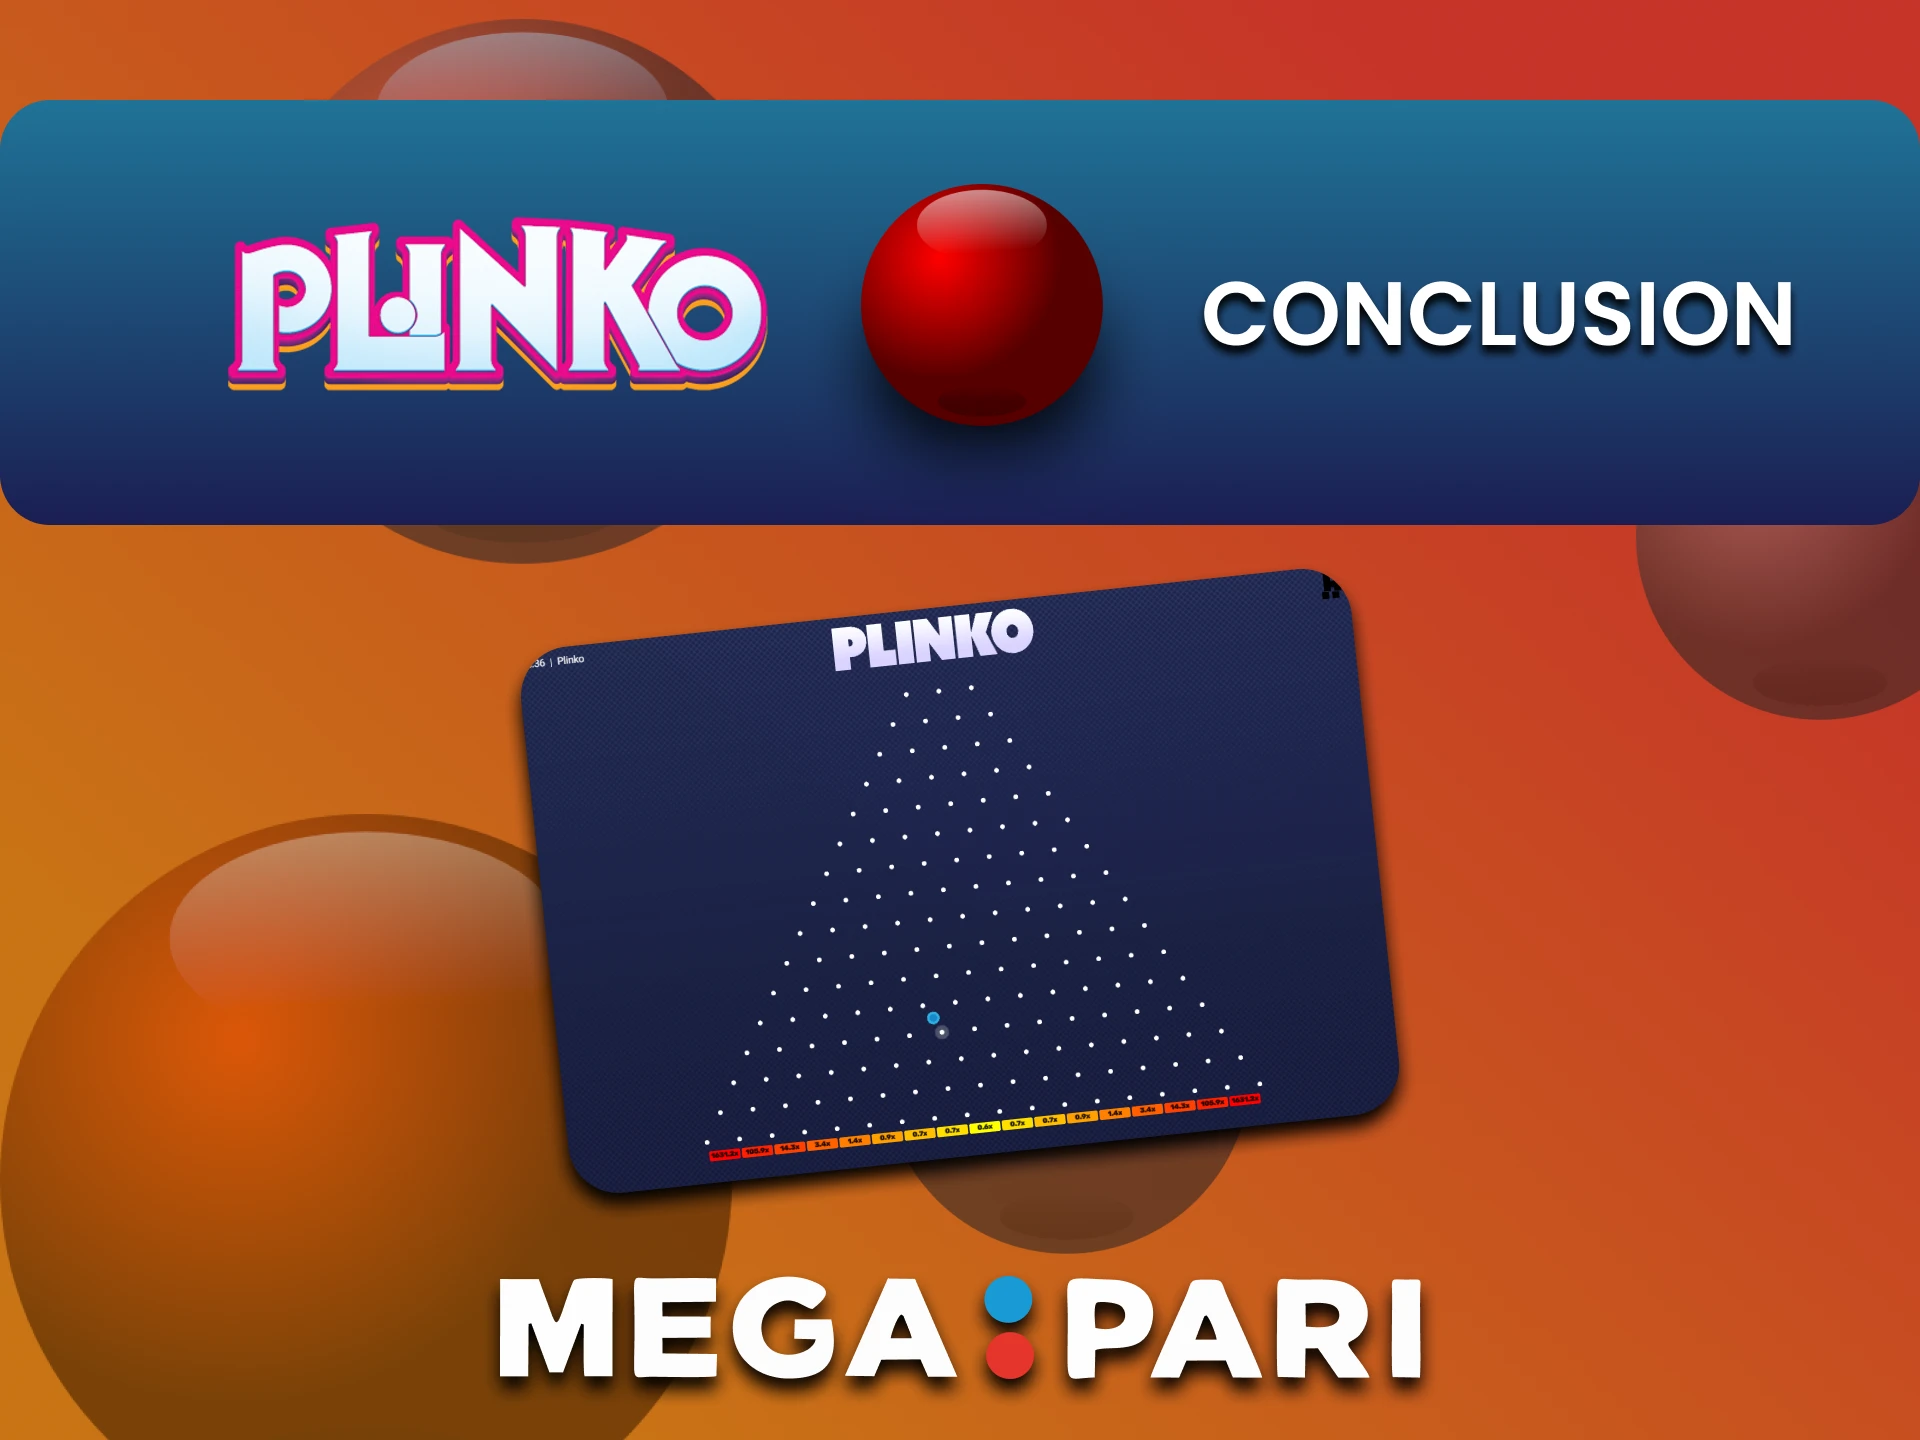 Megapari is perfect for playing Plinko.